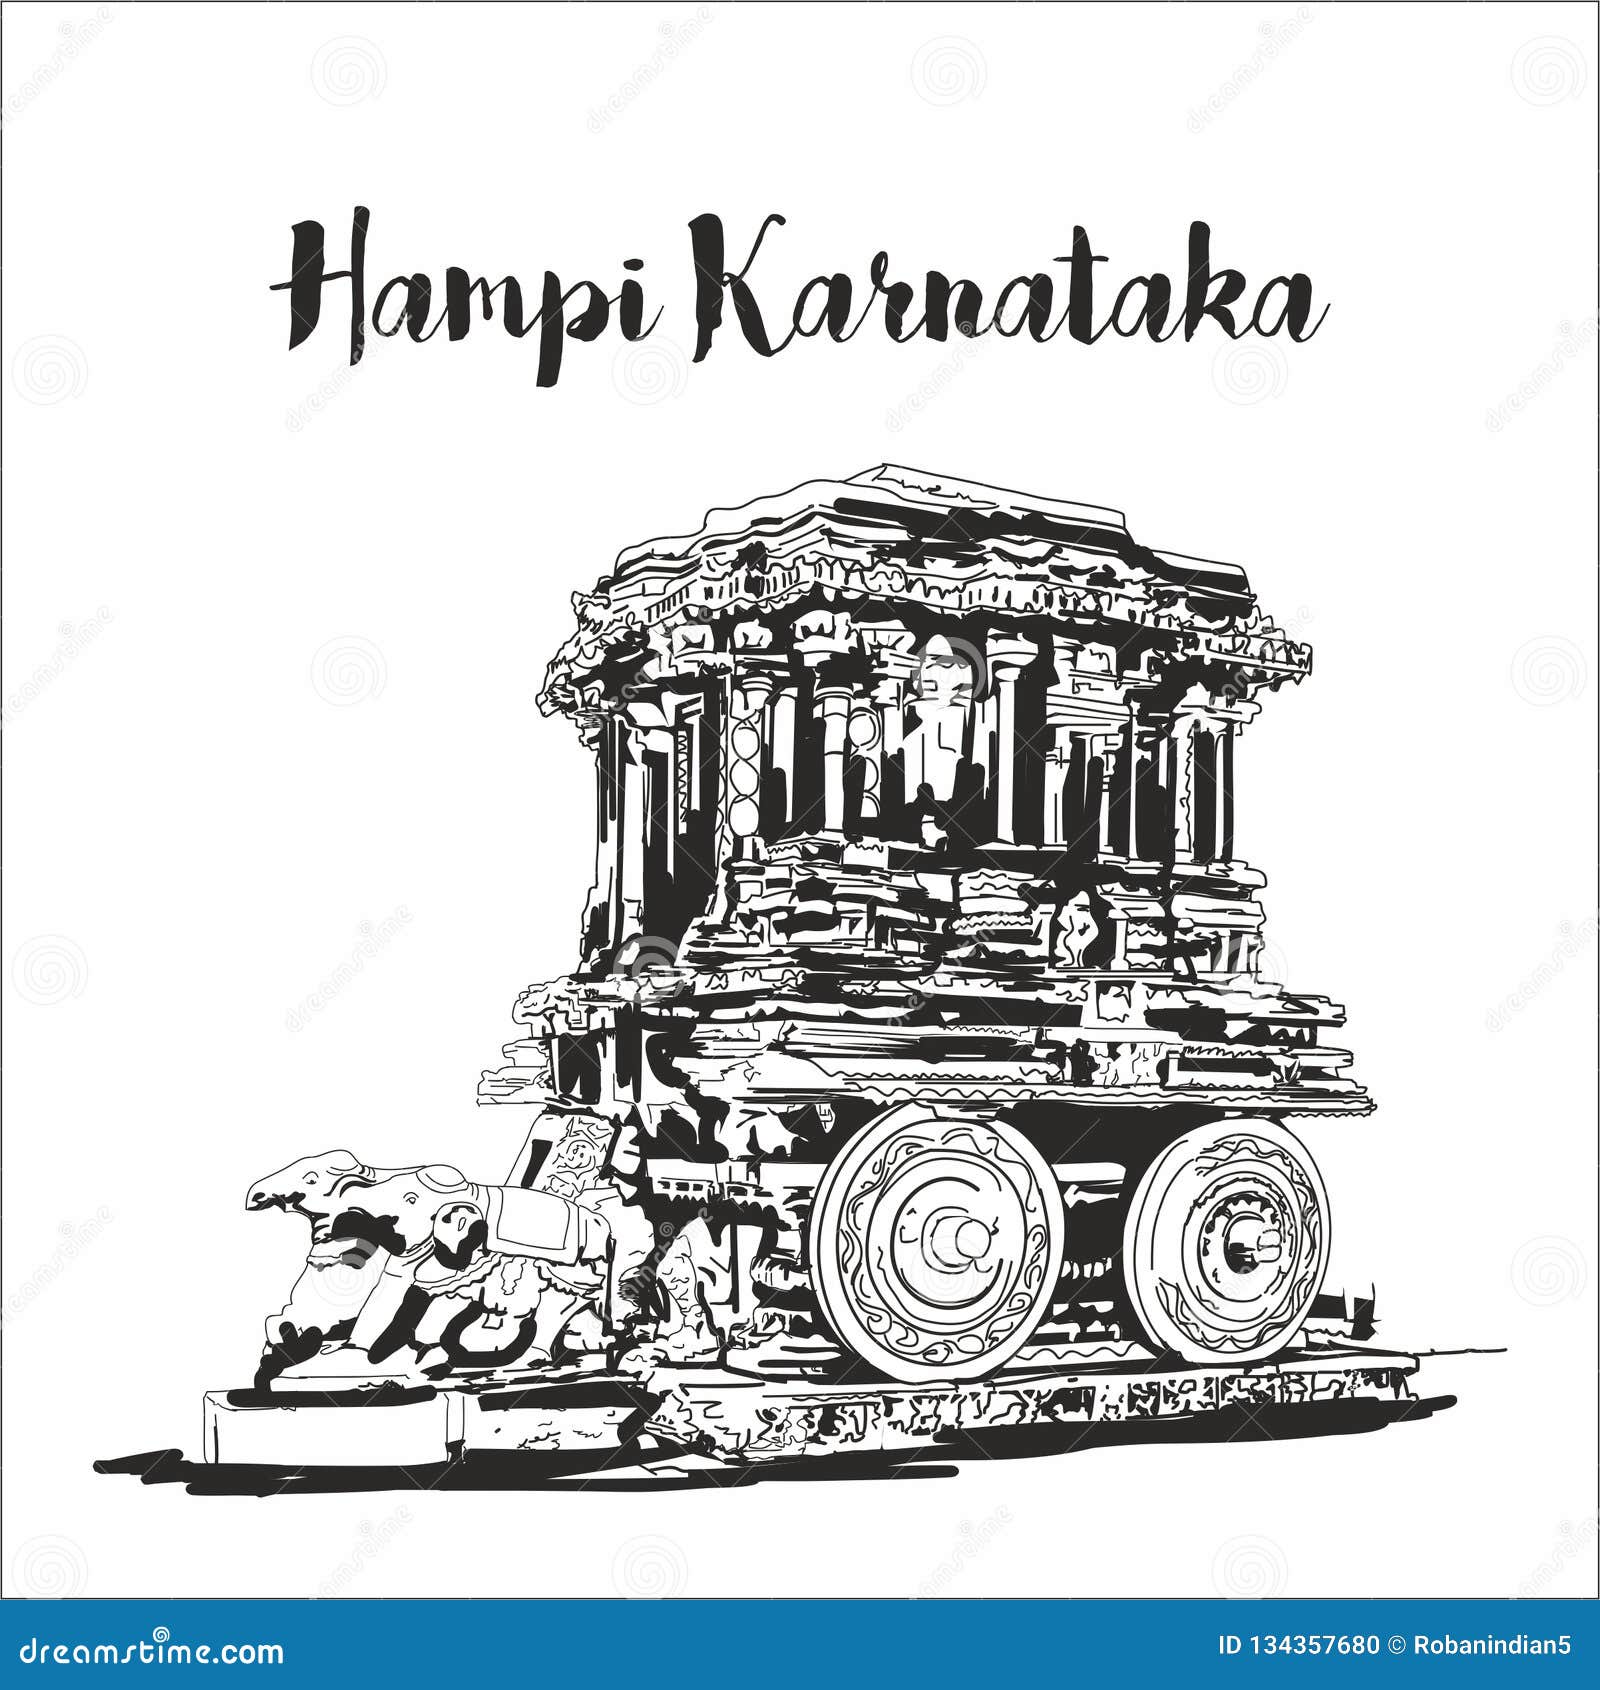 Hampi Karnataka Sketch or Drawing Stock Photo - Image of tourism ...